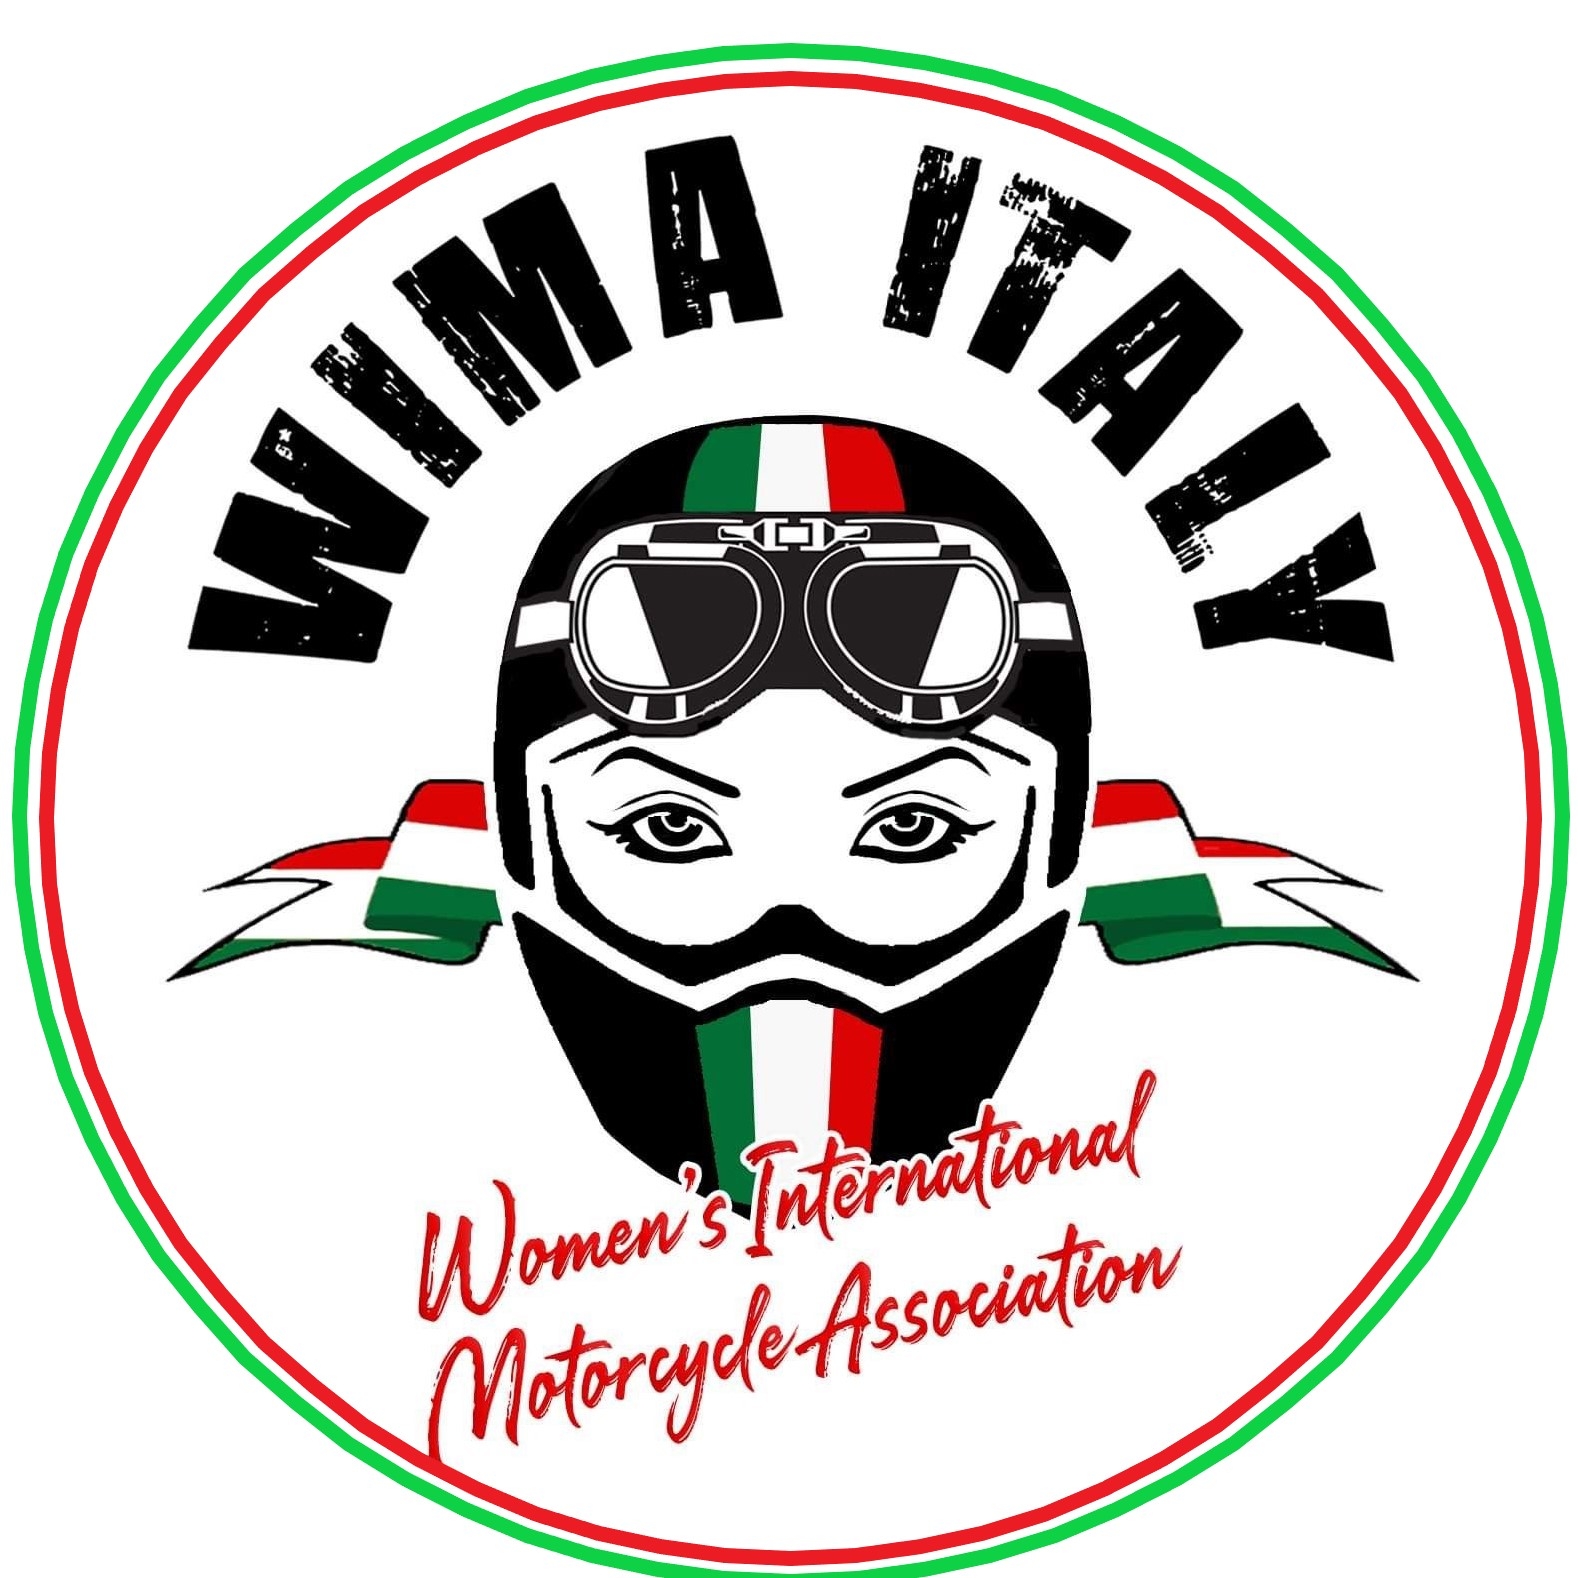 Wima Italy – Women’s International Motorcycle Association